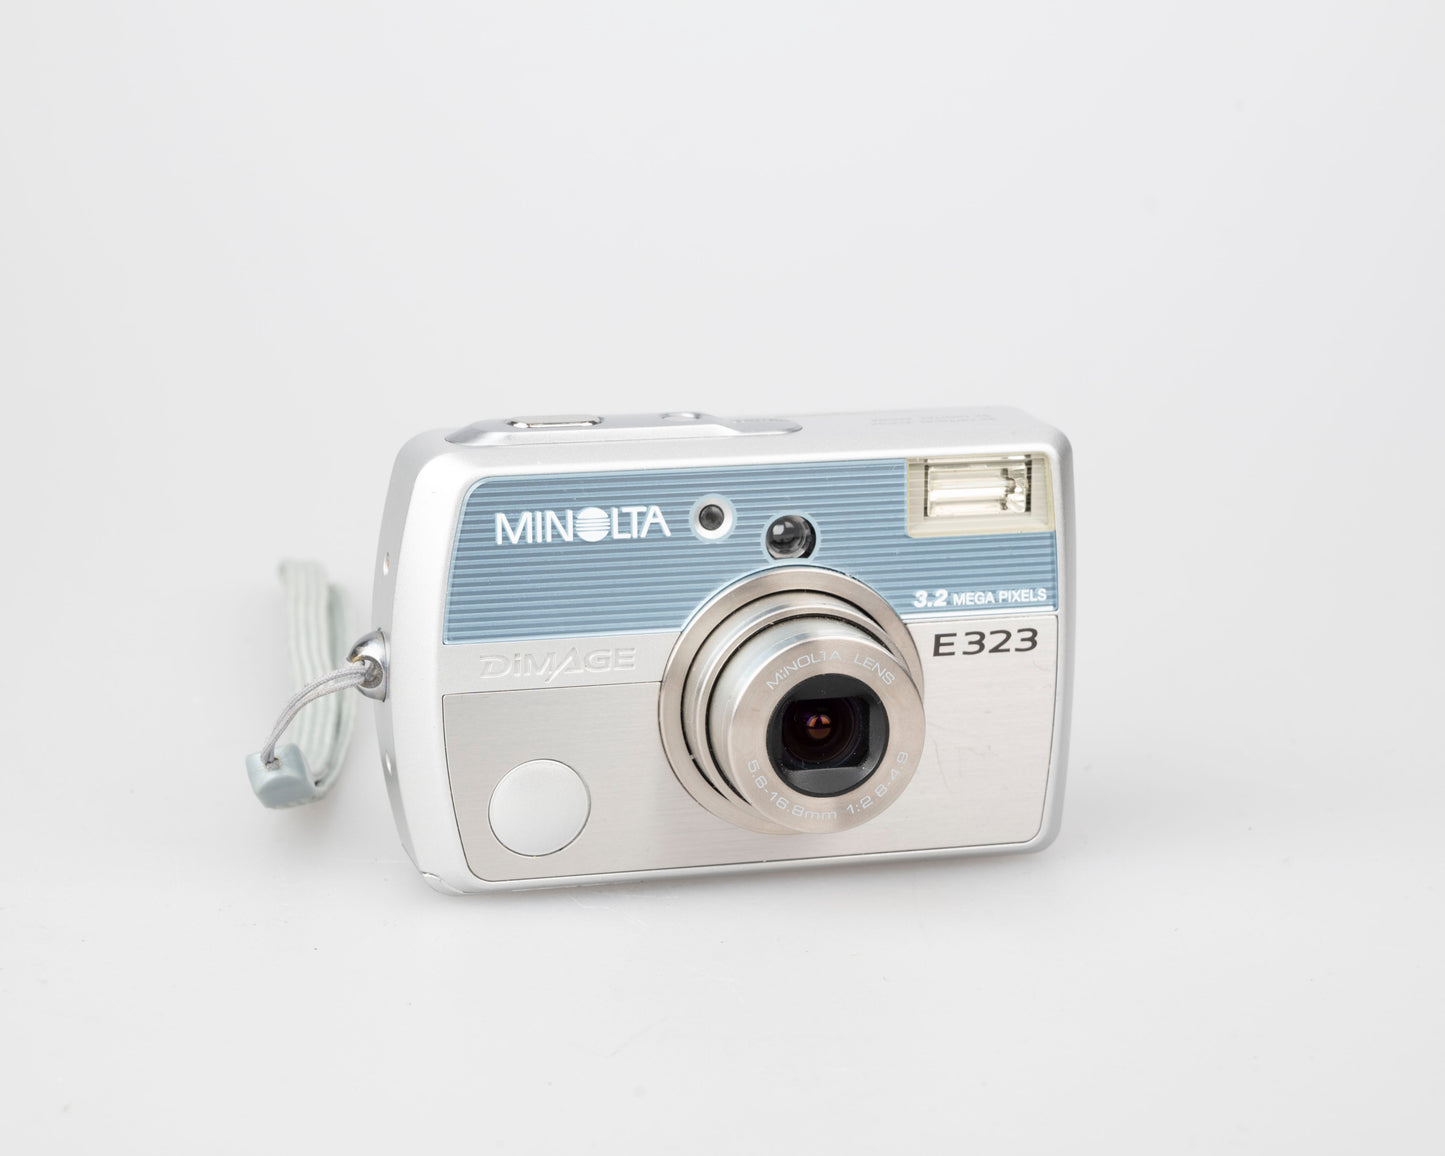 Minolta Dimage E323 digicam w/ 3.2 MP CCD sensor (uses AA batteries and SD memory cards)